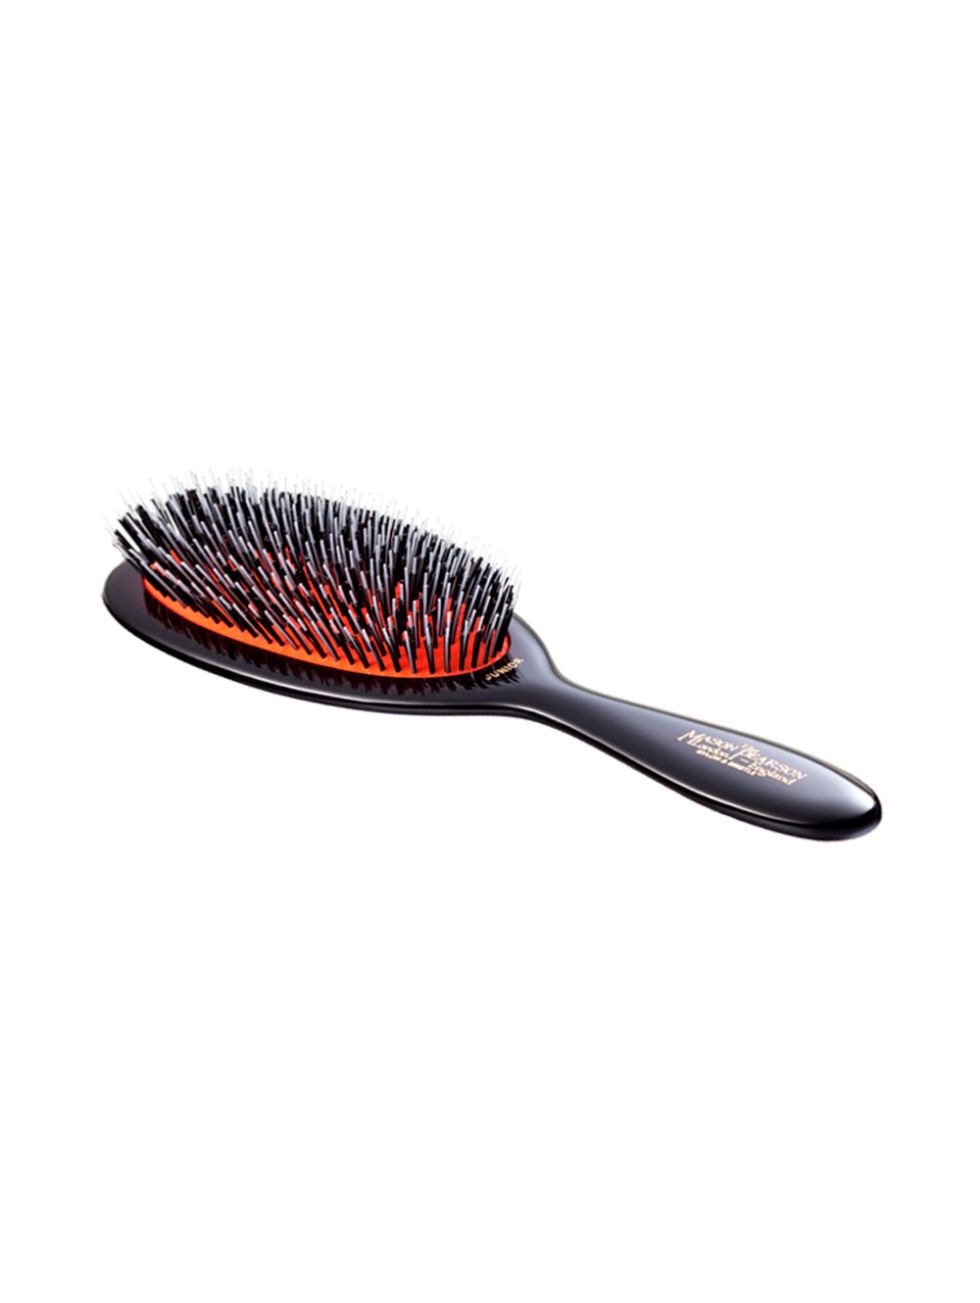 Brush, Product, Orange, Tool, Fashion accessory, Comb, Hair accessory, 